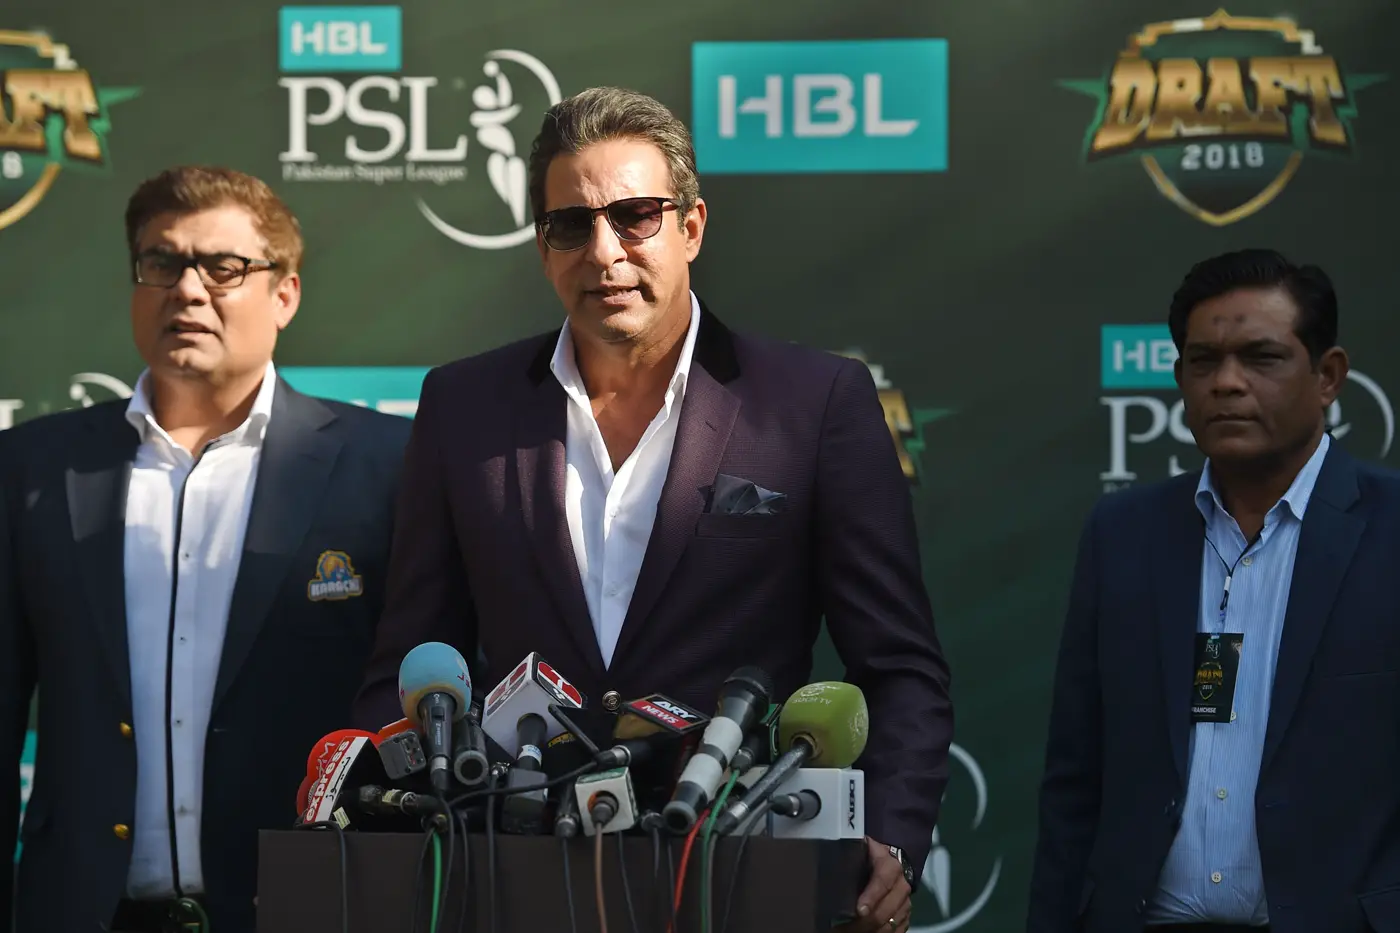 England owe a return tour to Pakistan: Wasim Akram